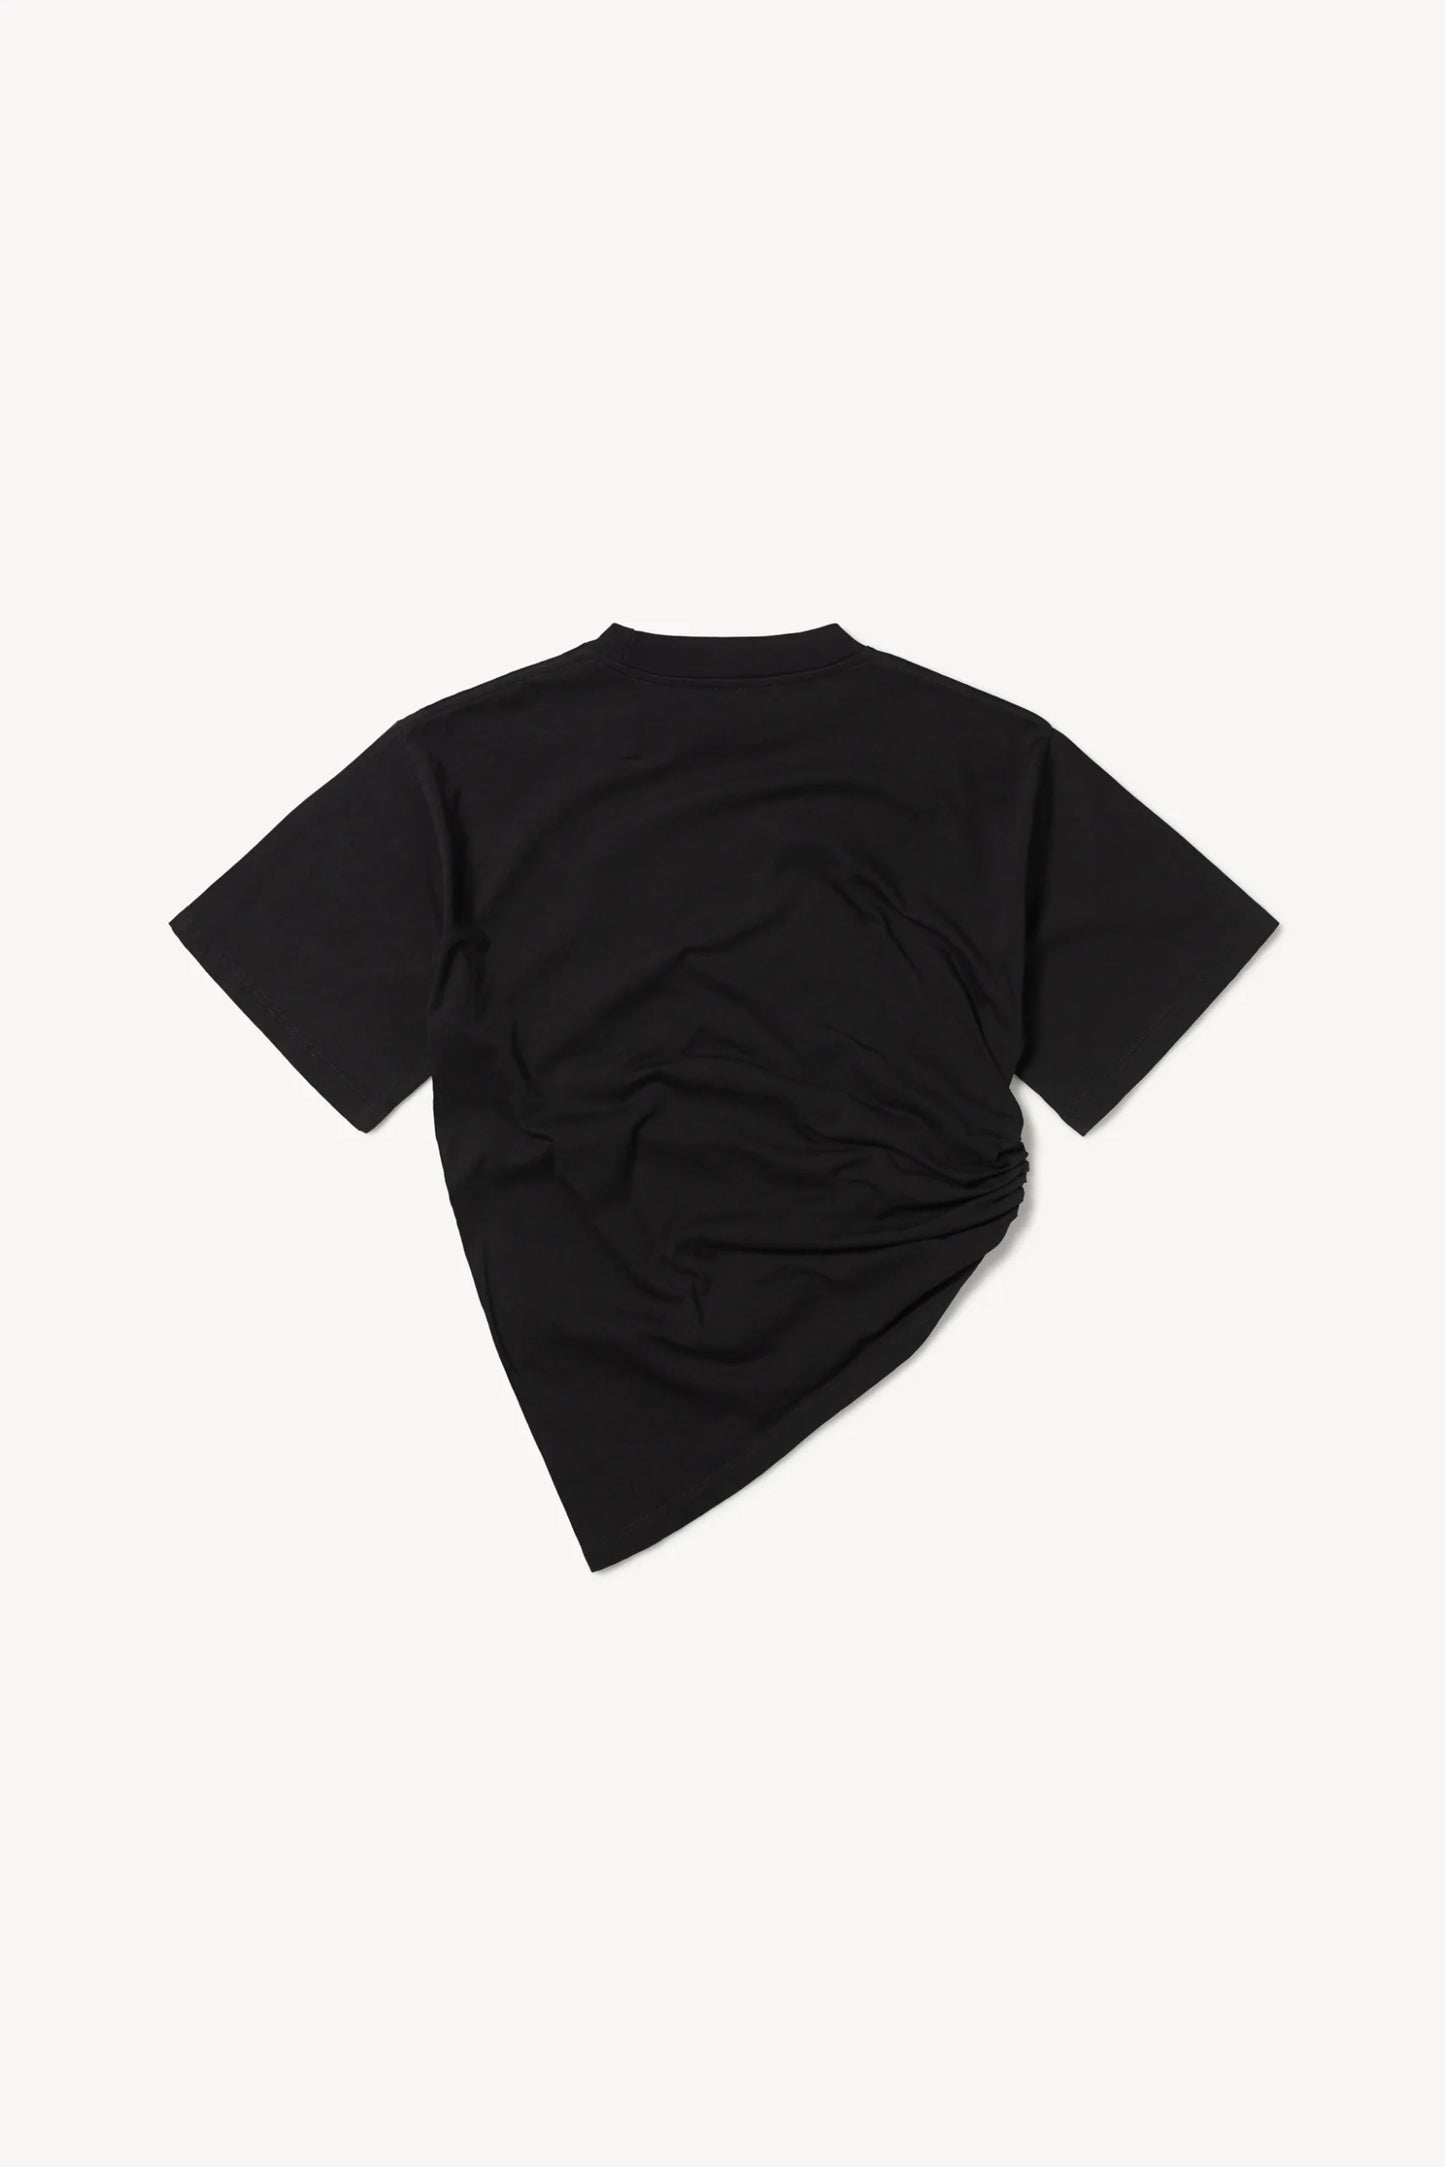 Scan Temple, Black, T-Shirt